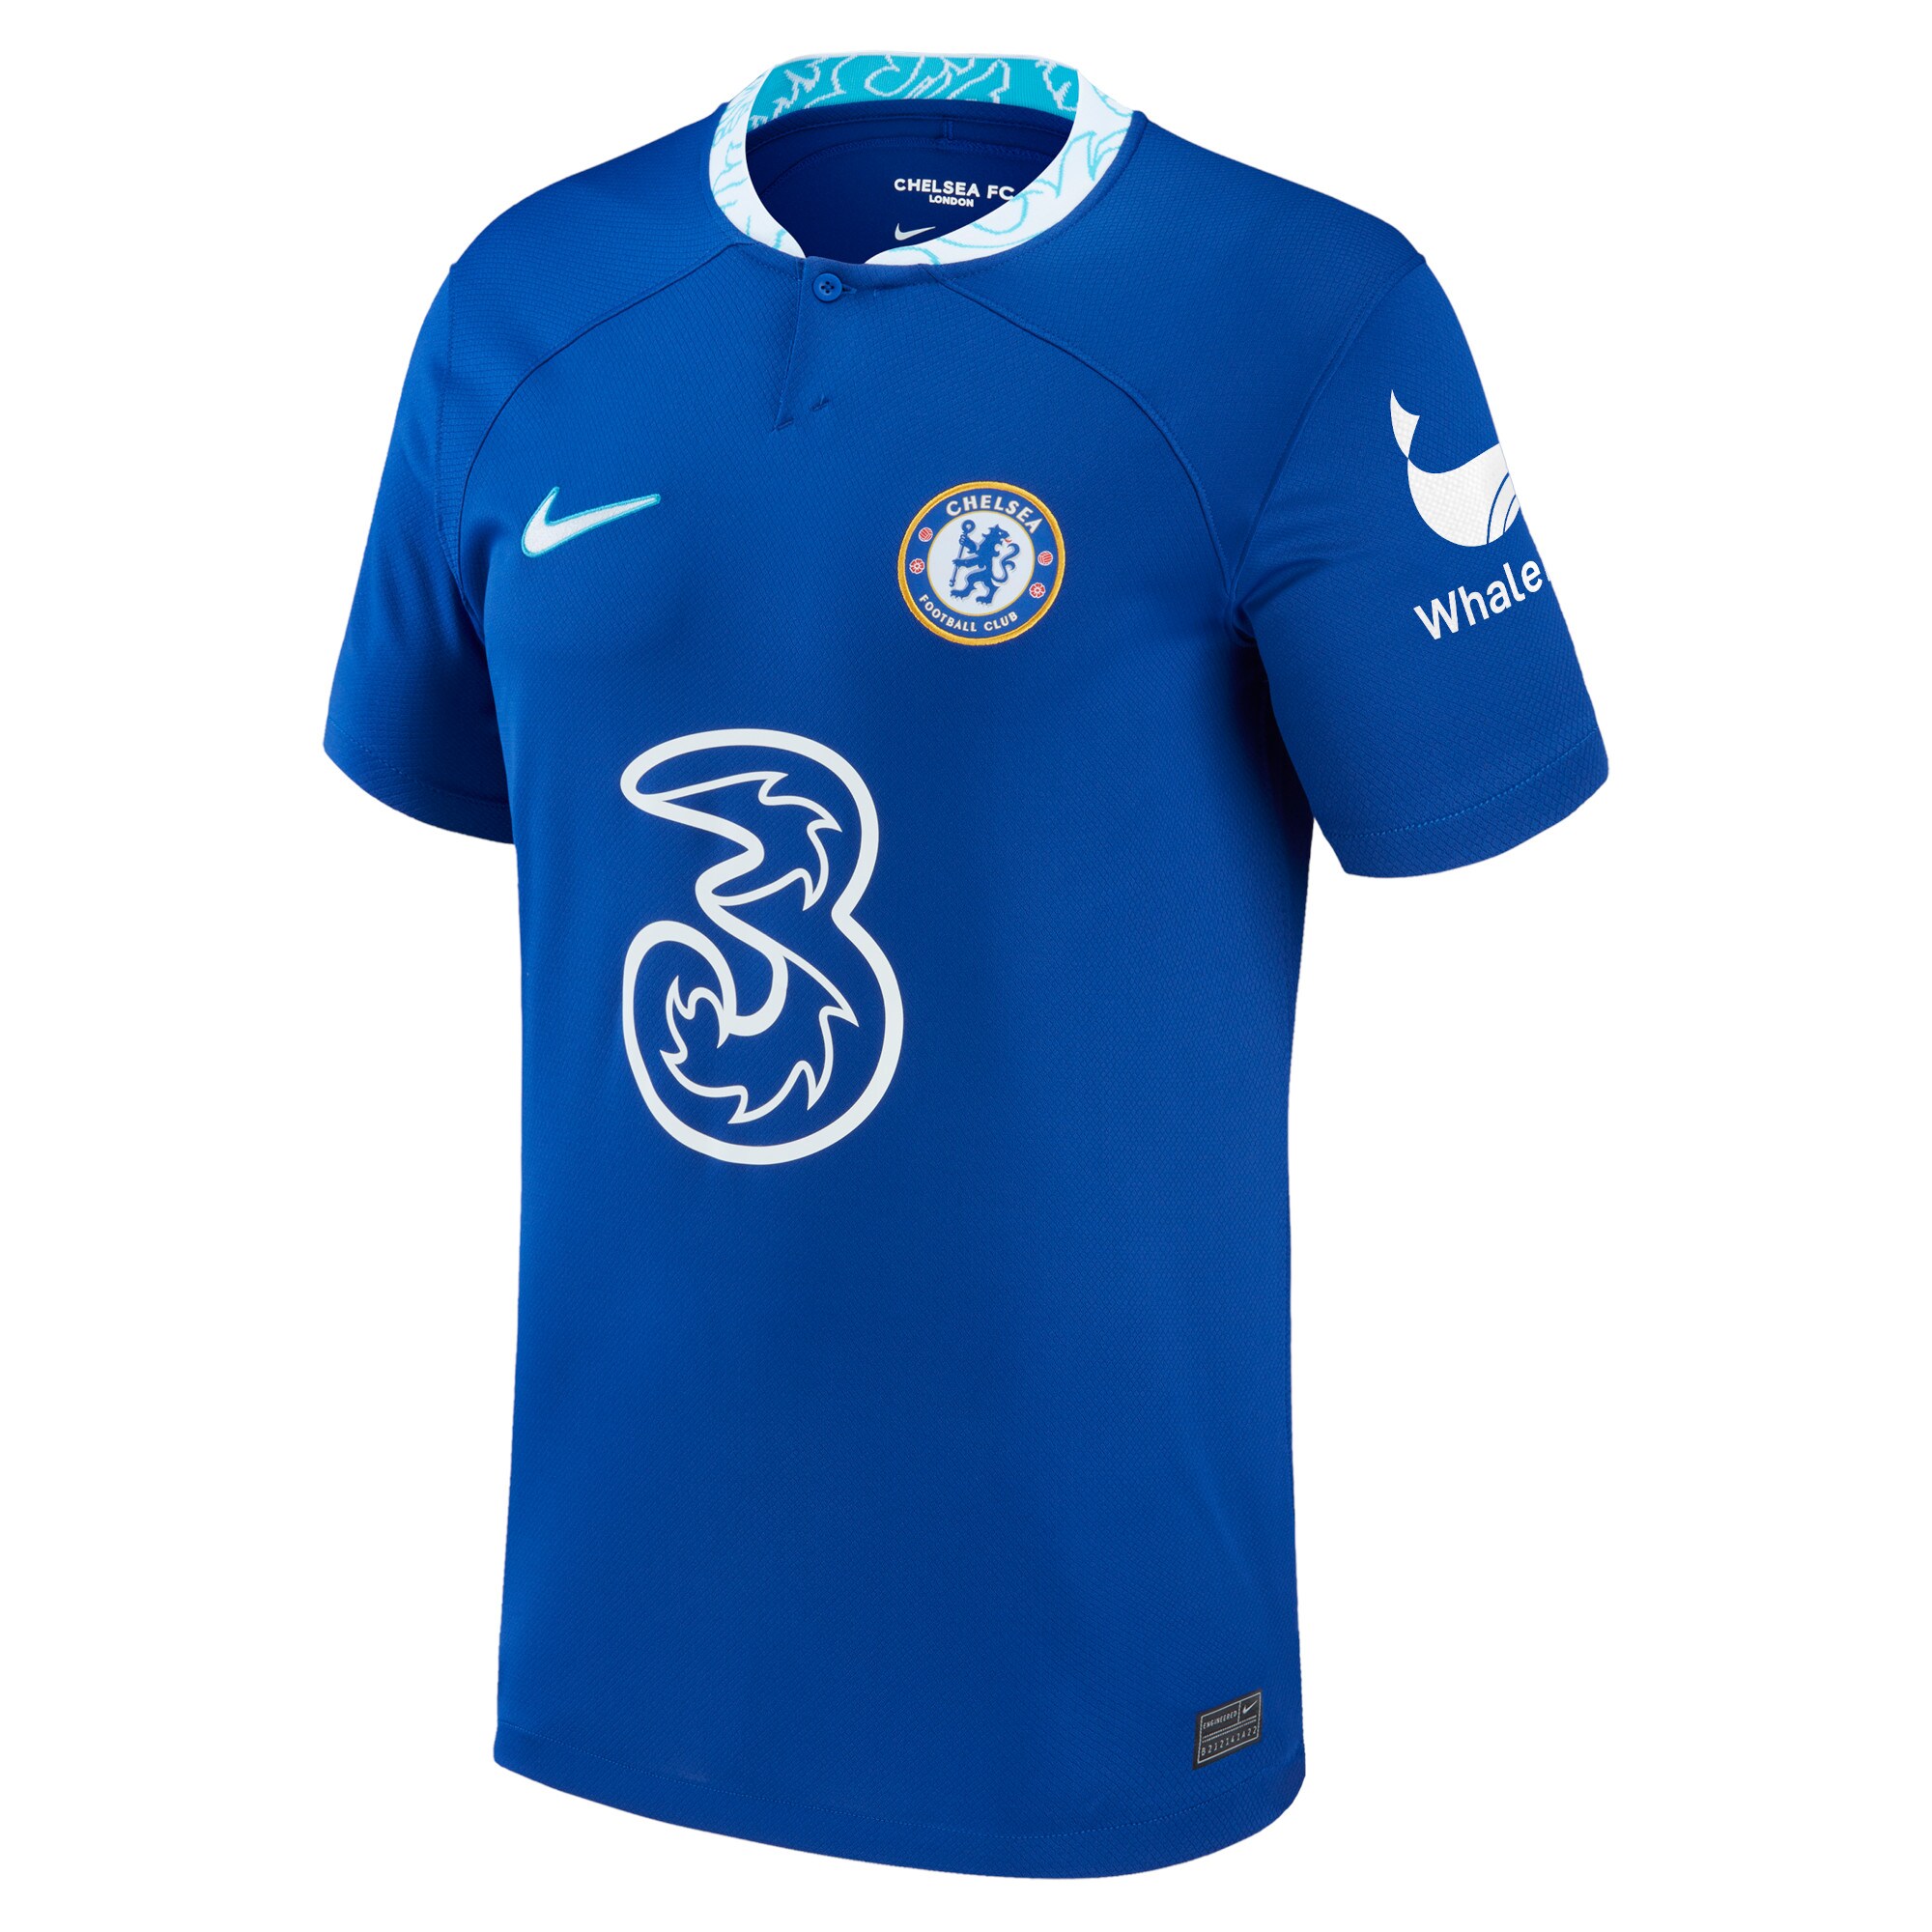 Chelsea WSL Home Stadium Shirt 2022-23 with Reiten 11 printing